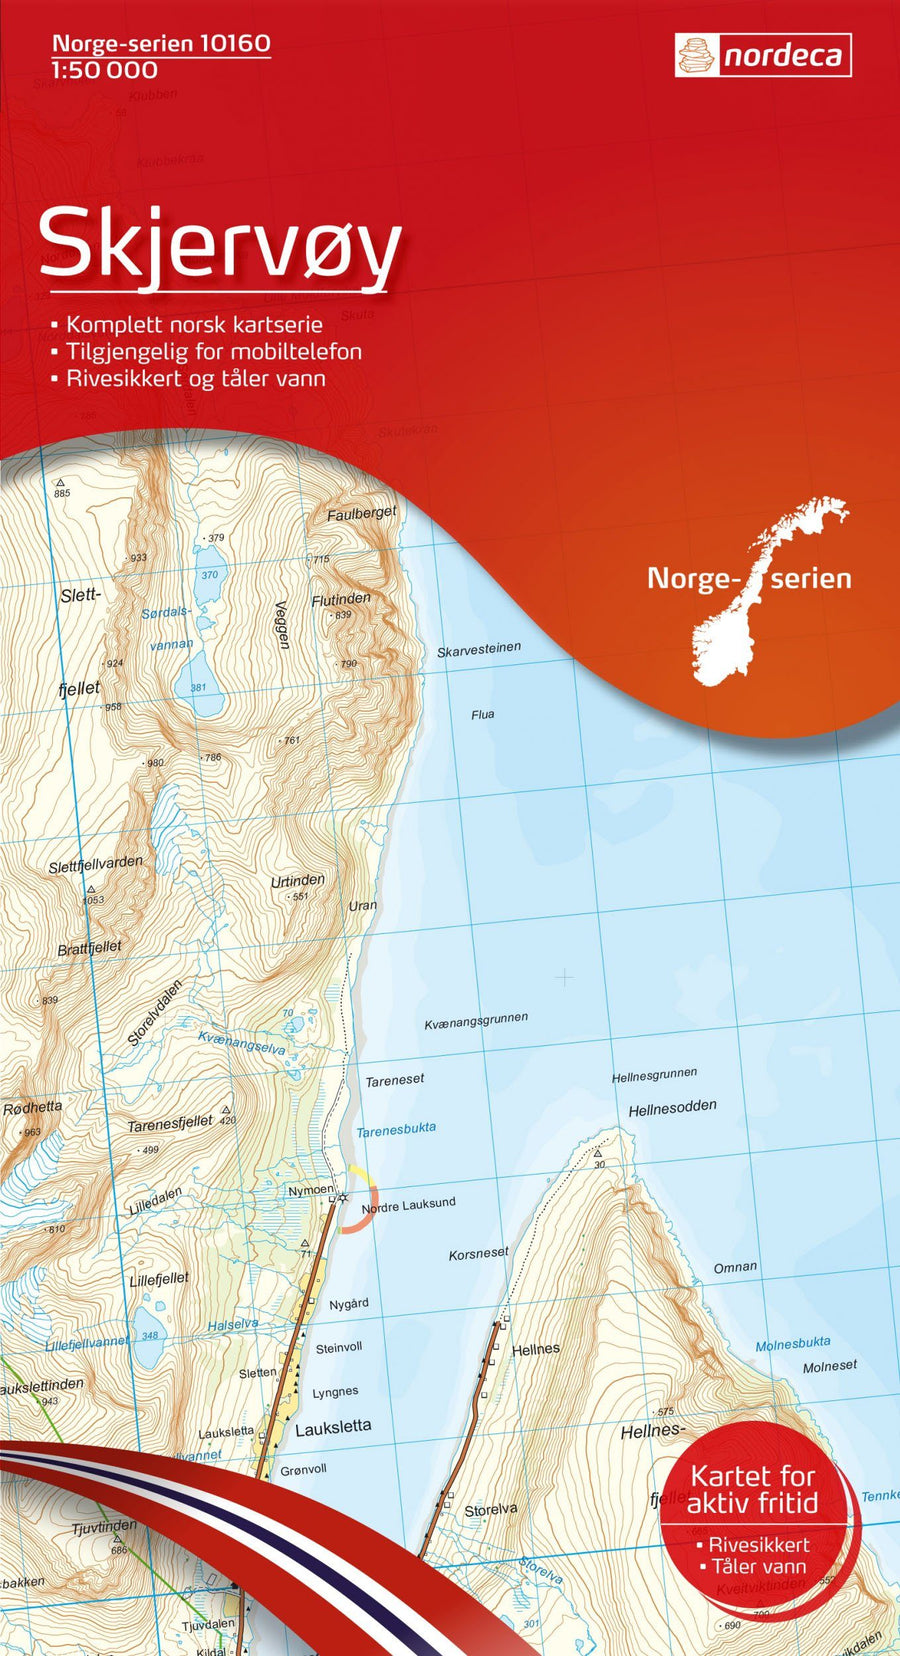 Carte de randonnée n° 10160 - Skjervoy (Norvège) | Nordeca - Norge-serien carte pliée Nordeca 